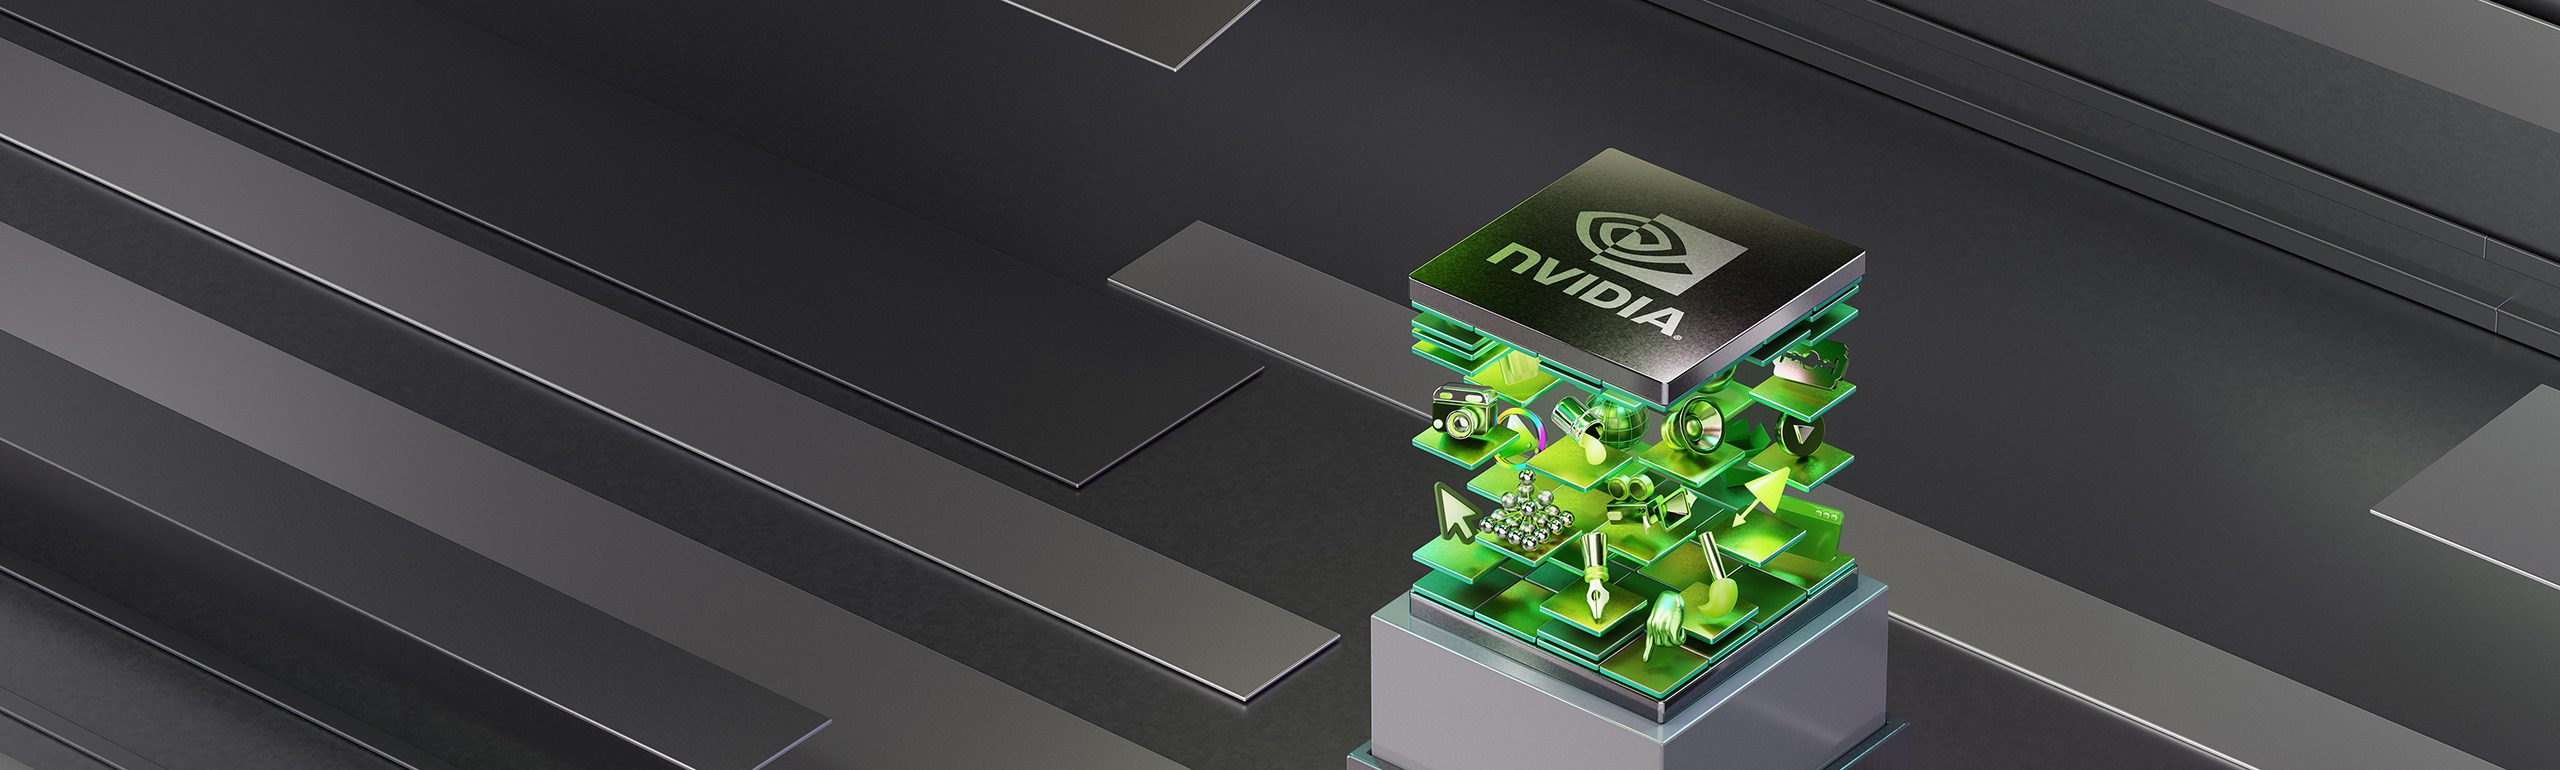 NVIDIA GeForce RTX Studio Banner